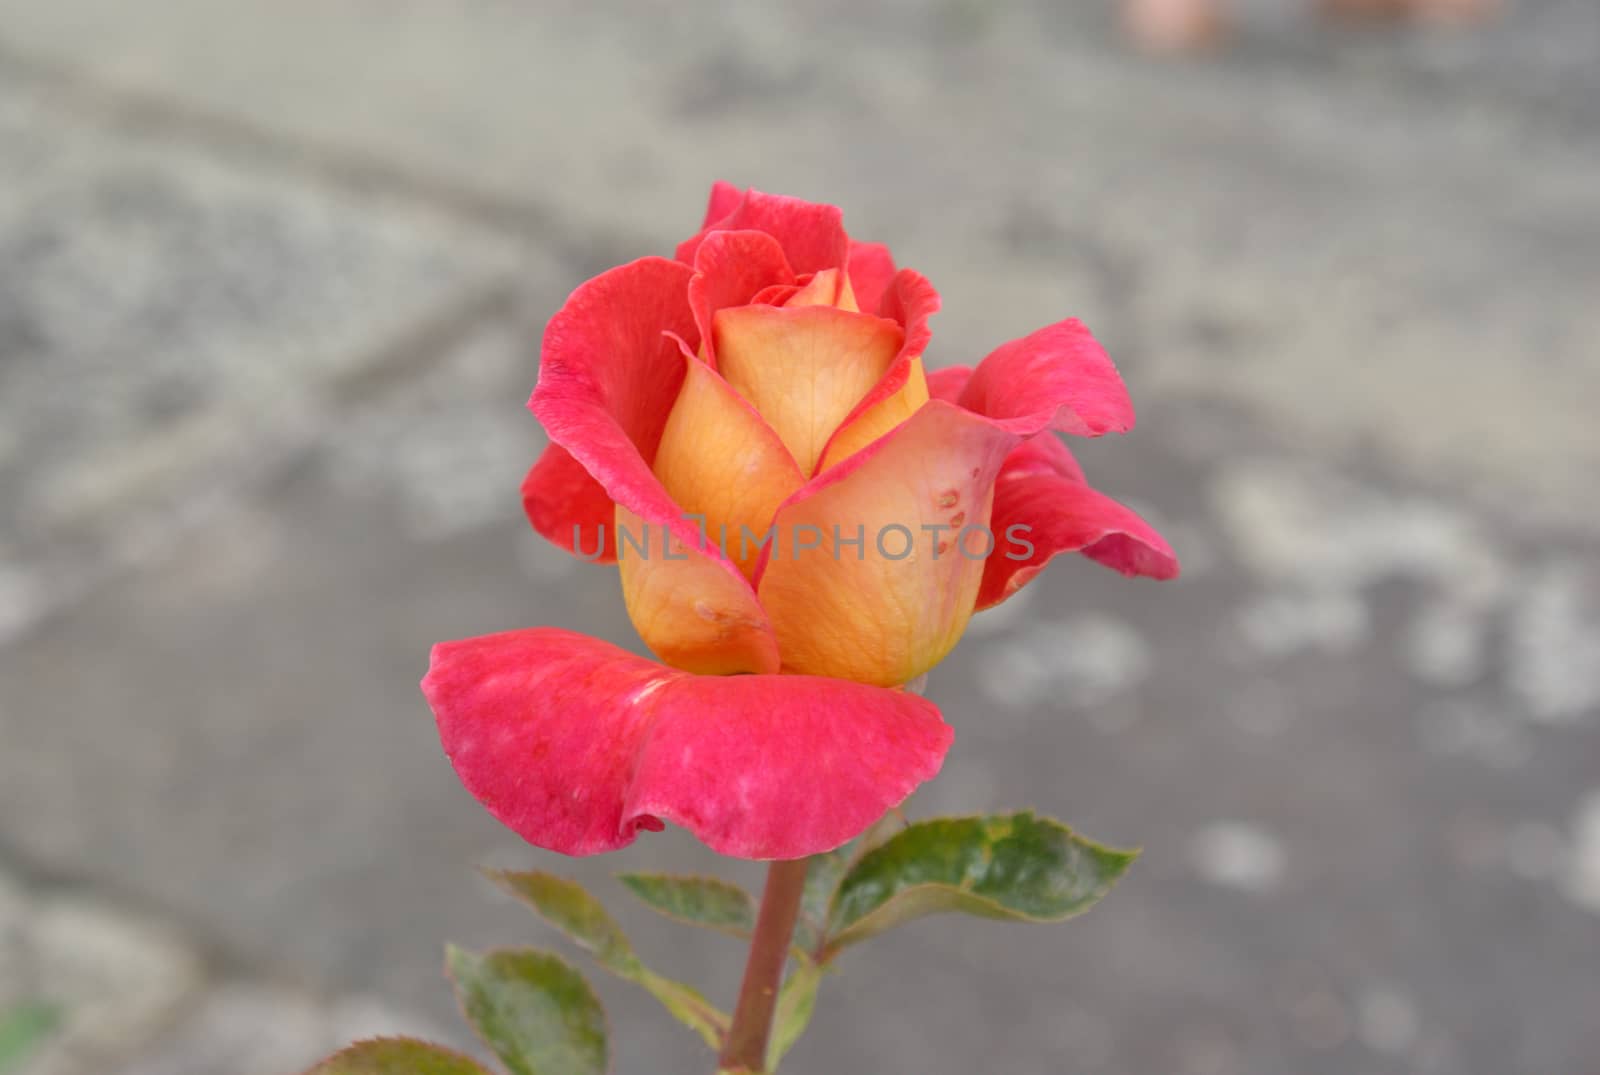 nice rose by renales